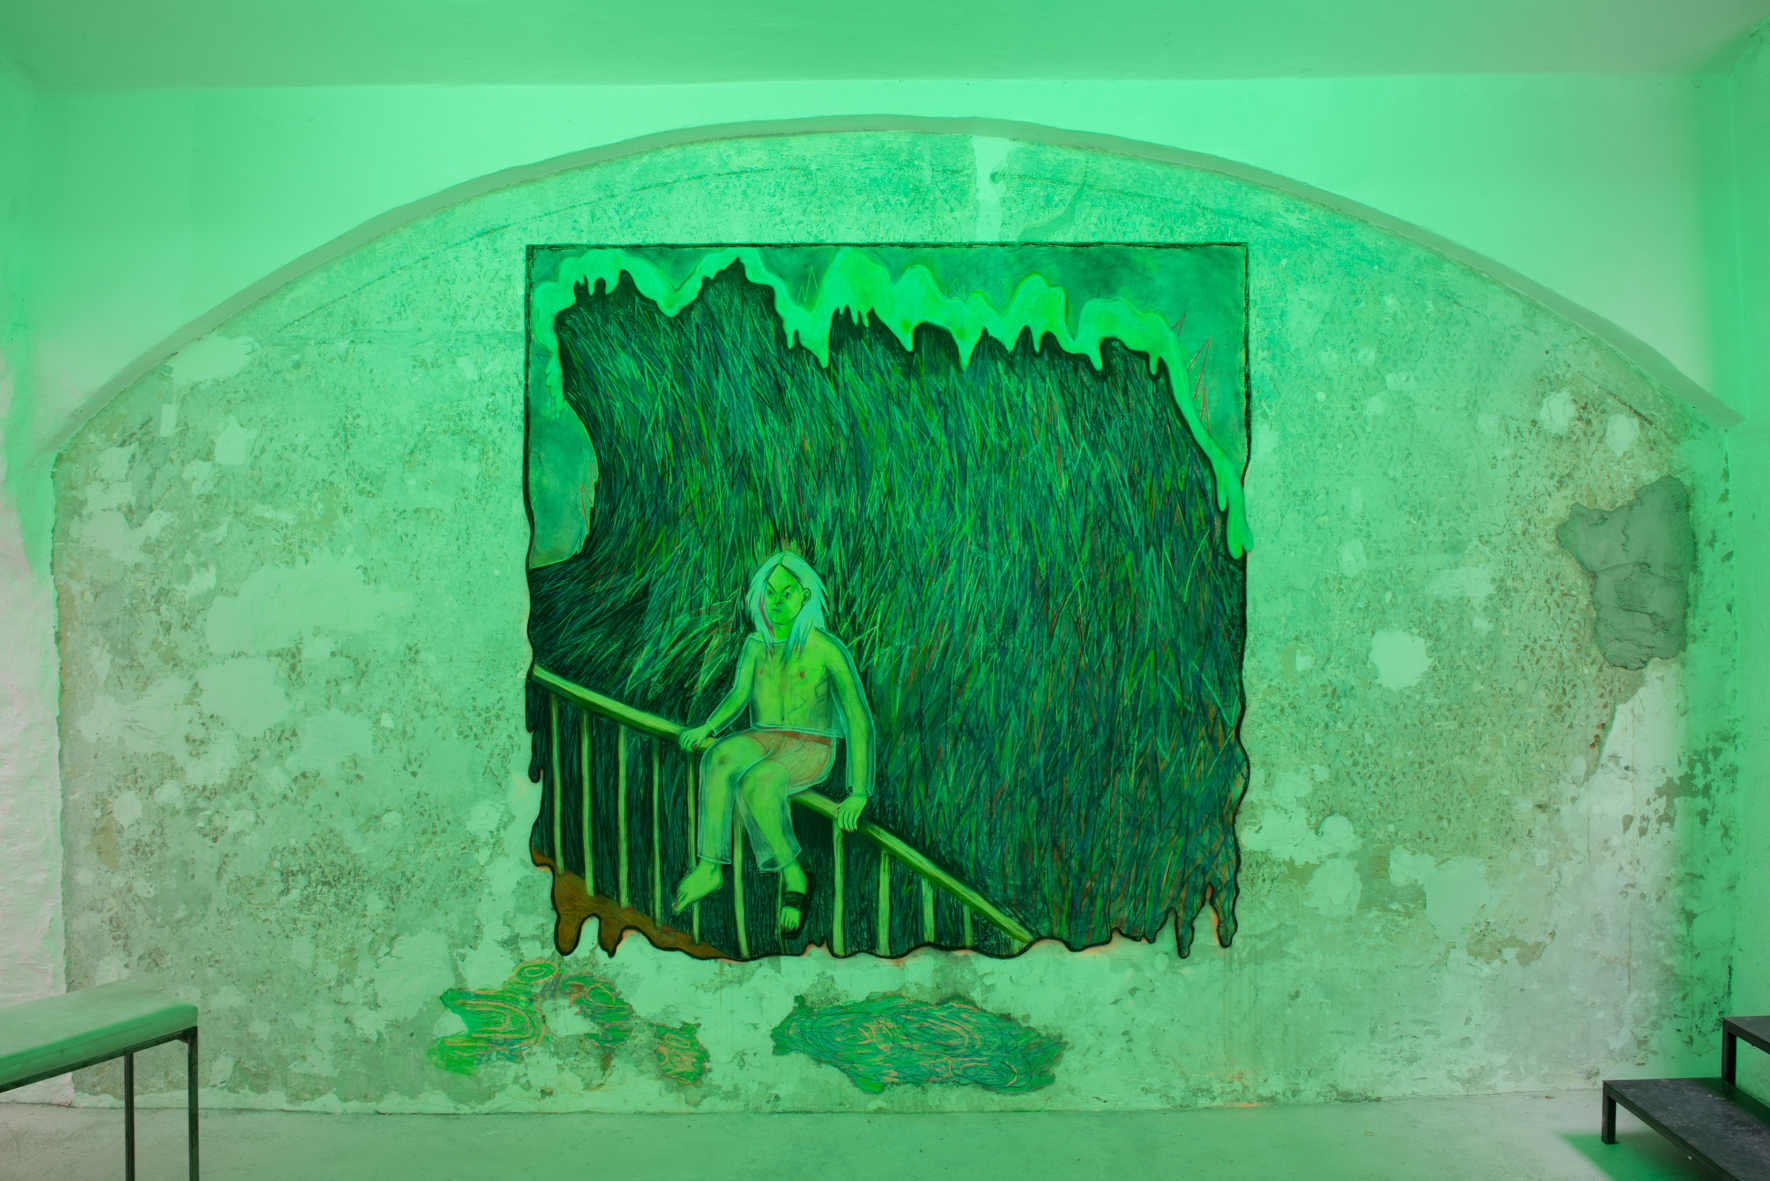 Giuliana Rosso, L’arcobaleno disidratato, 2019, chalks and charcoal on paper, 200 x 200 cm